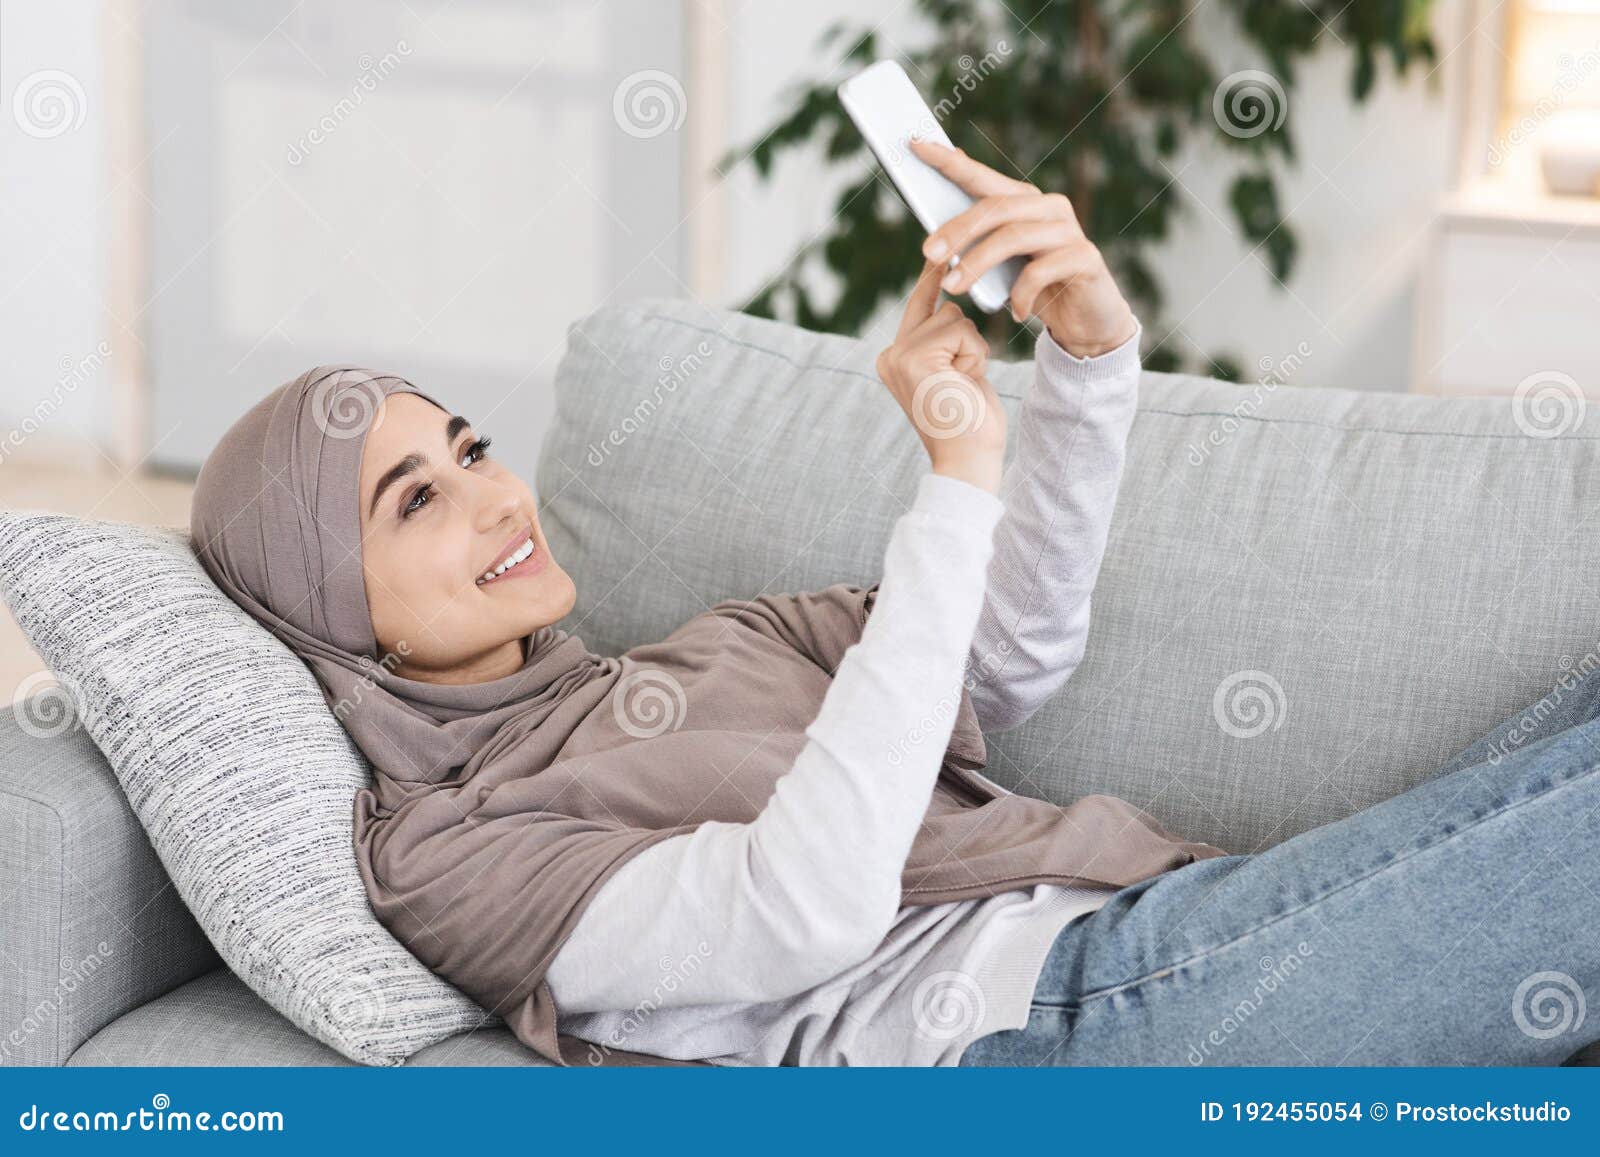 Arabia girl mobile number